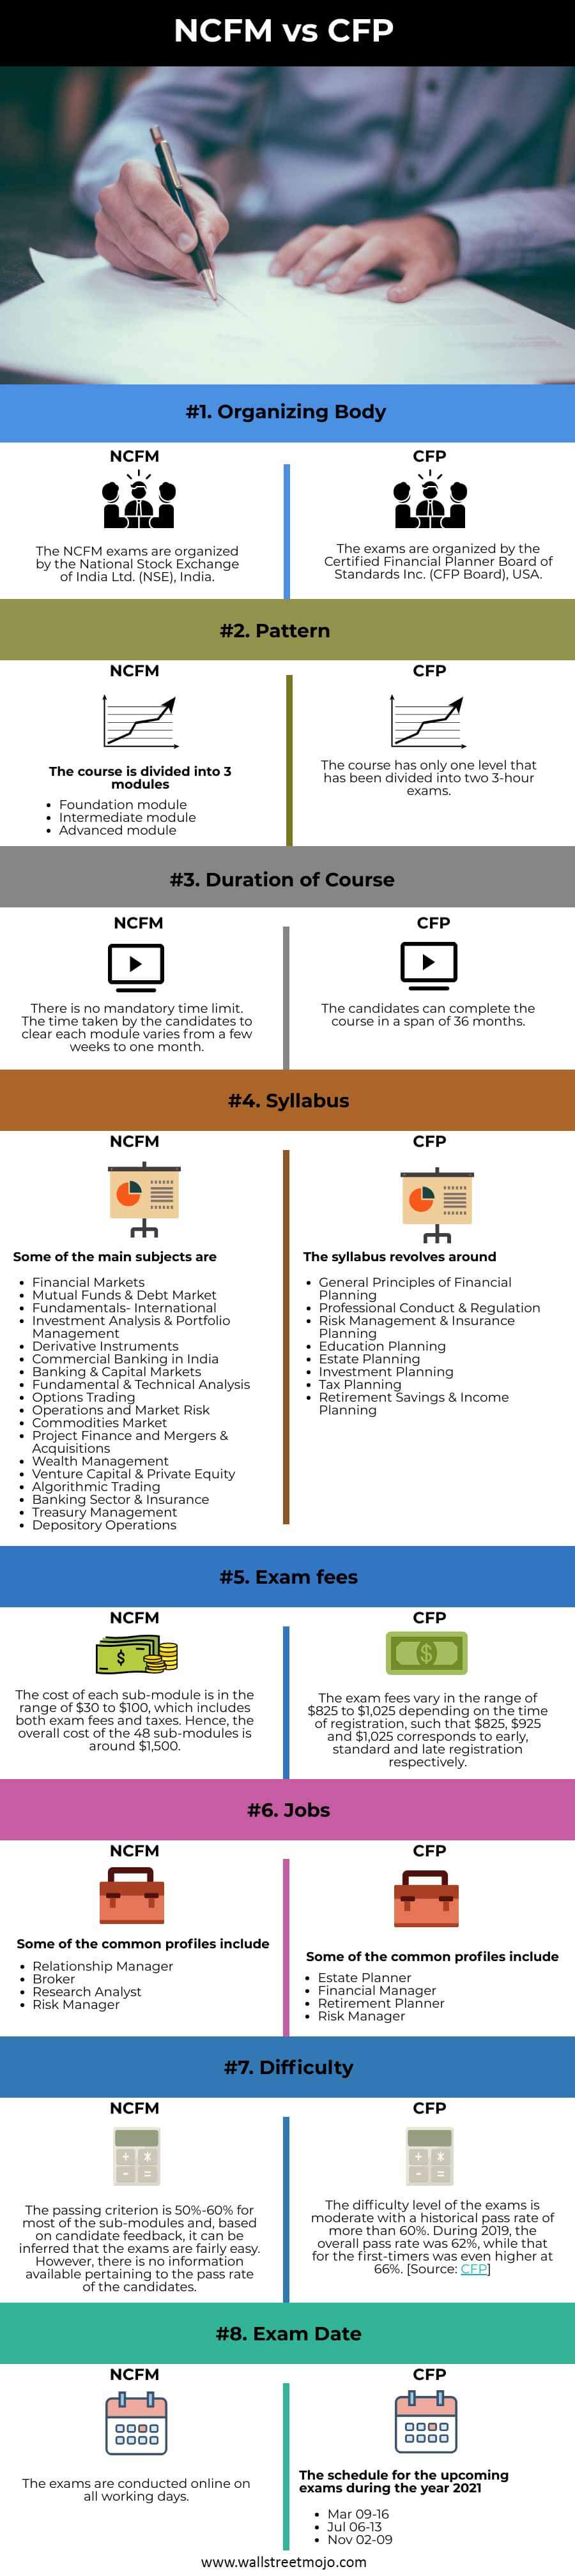 NCFM-vs-CFP-info